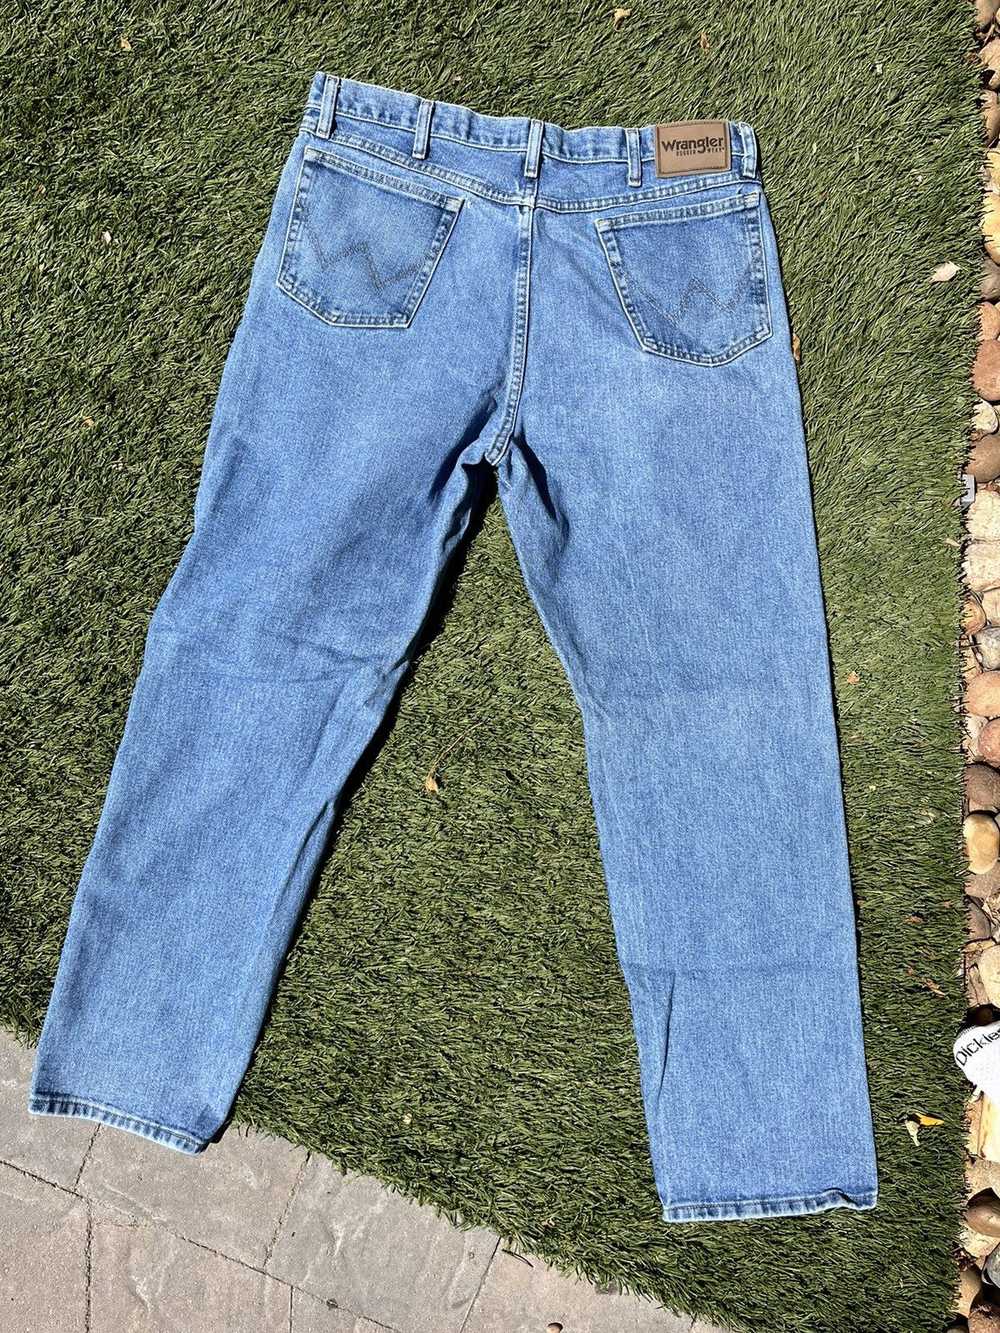 Vintage × Wrangler Faded Wrangler Jeans - image 2